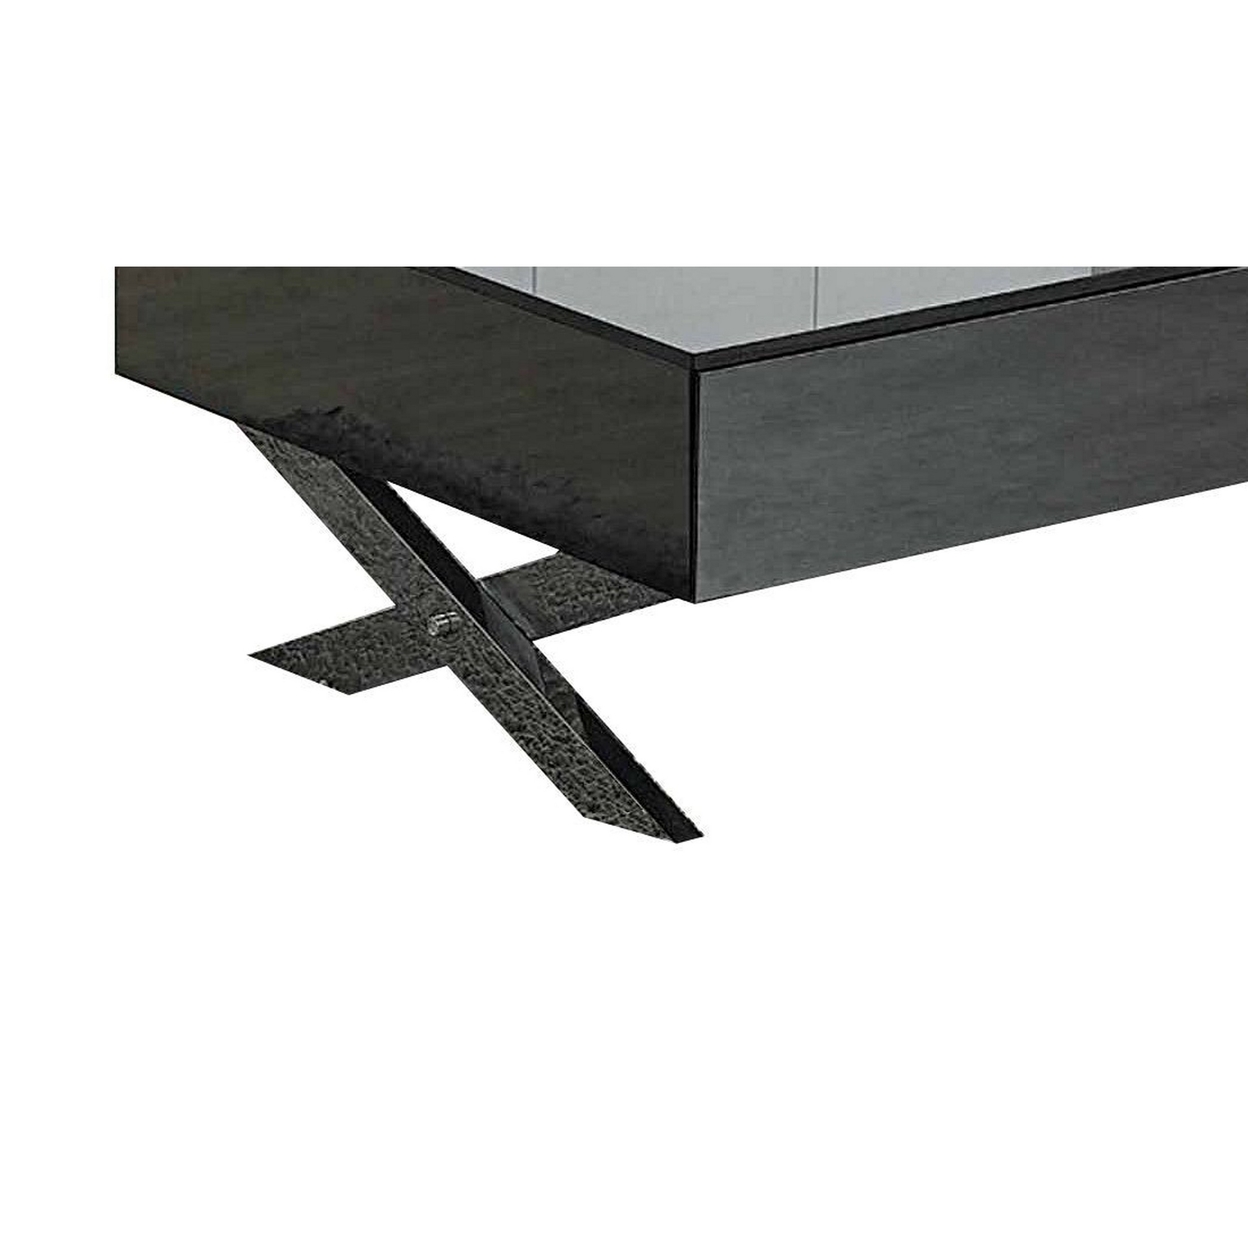 Tika 51 Inch 2 Drawer Coffee Table, Mirrored Glass Top, Cross Legs, Black - Saltoro Sherpi